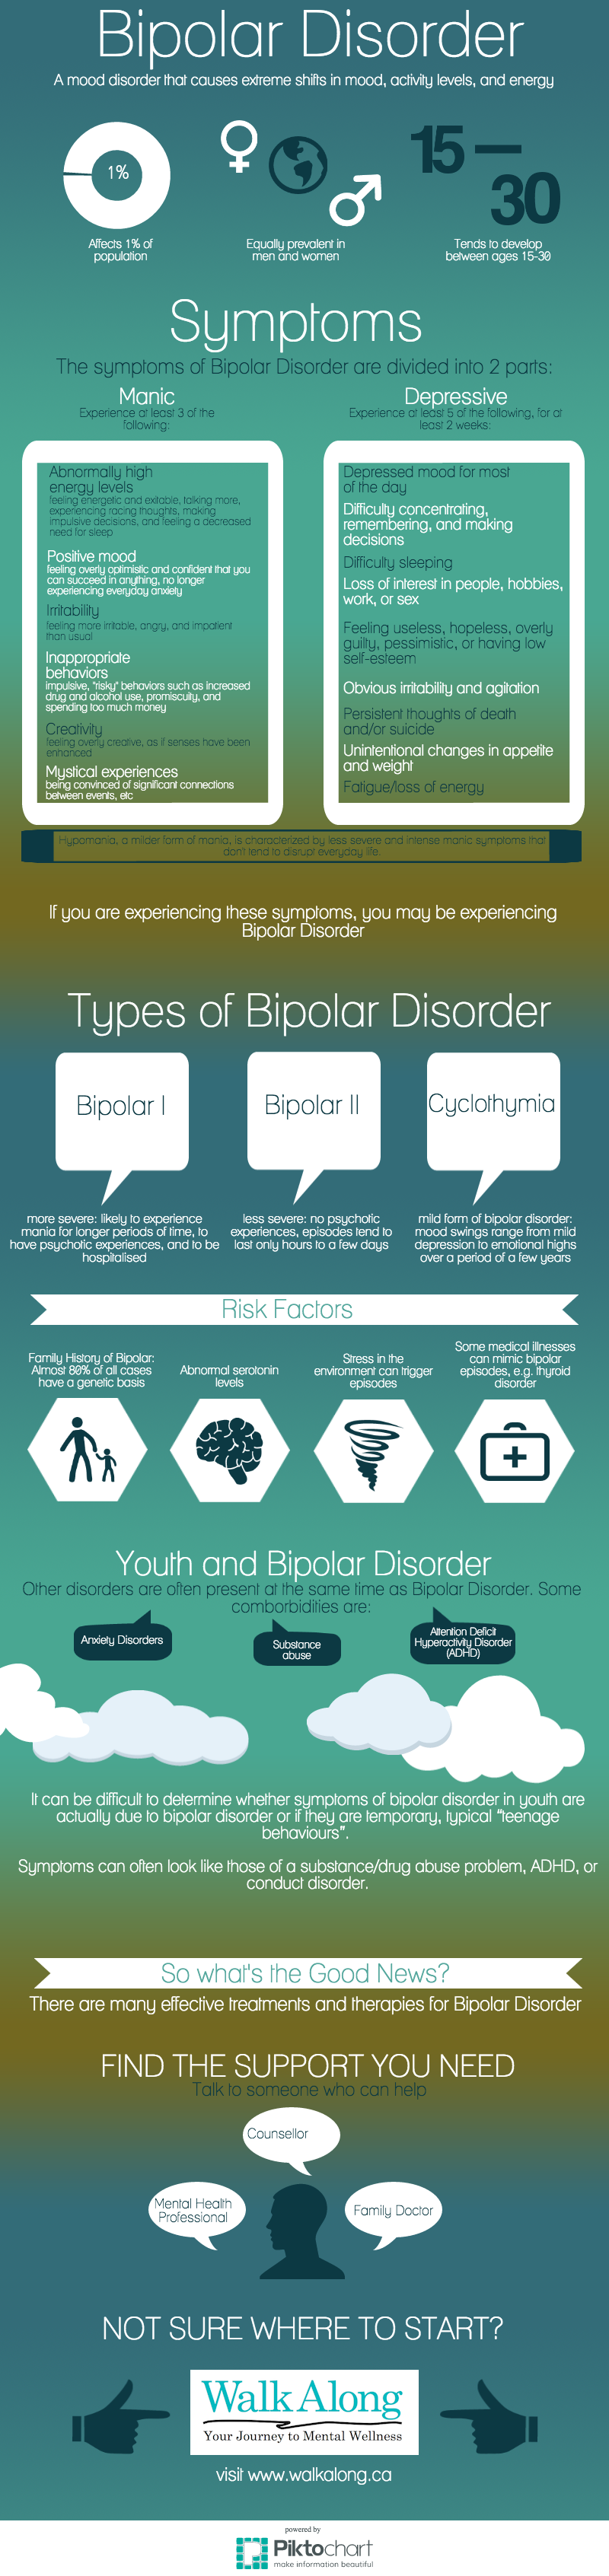 bipolar-disorder-bd-walk-along